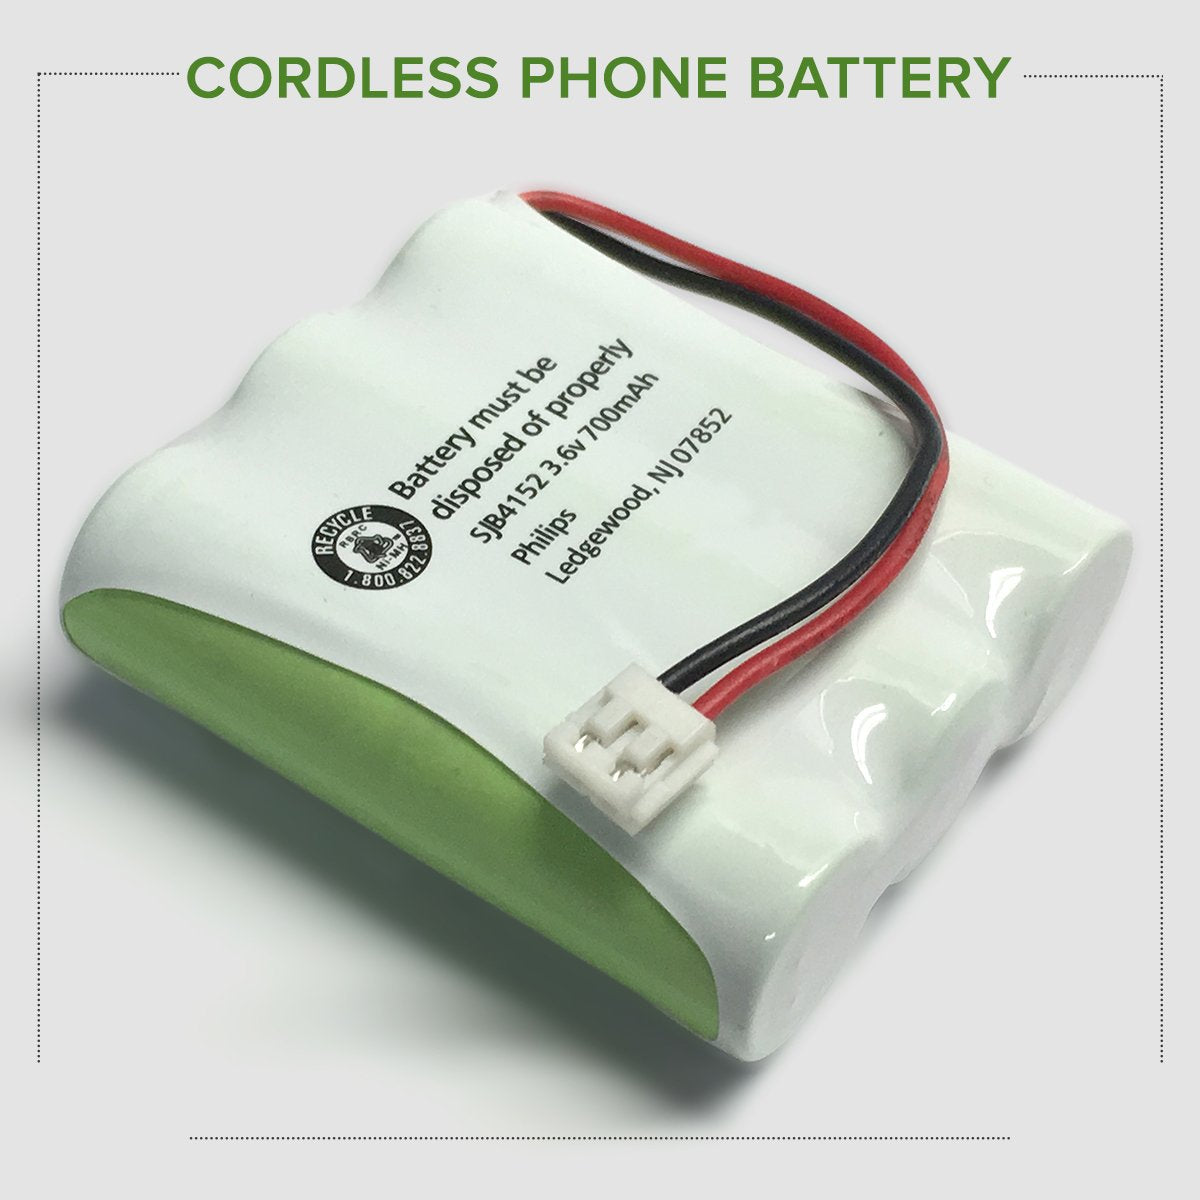 GE 1837203 Cordless Phone Battery